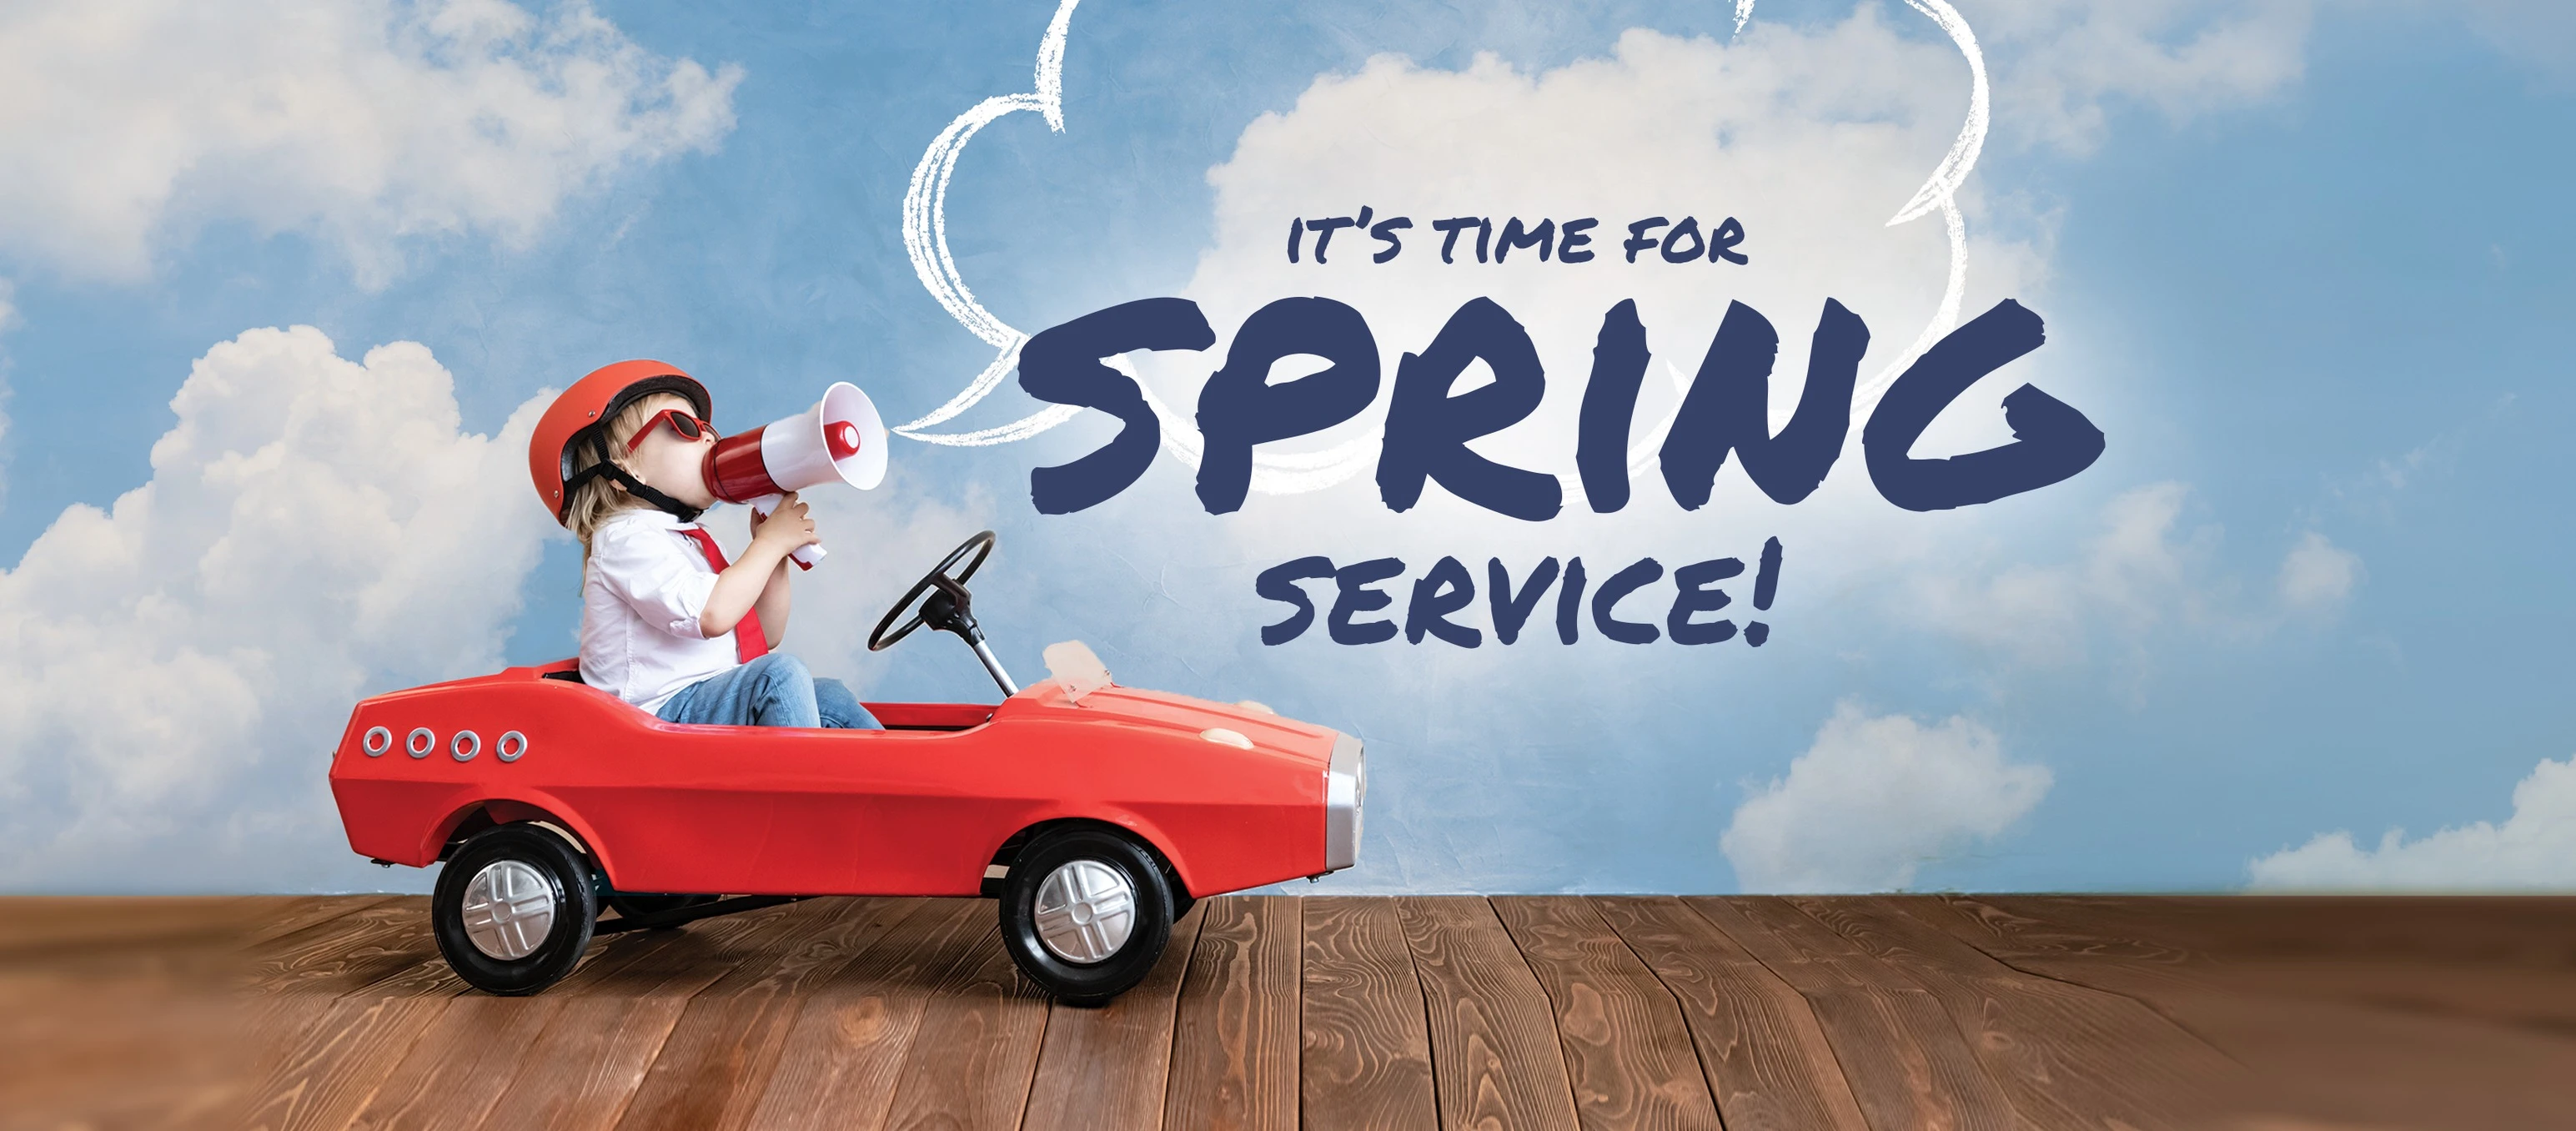 102-spring-service-17113916646269.jpg